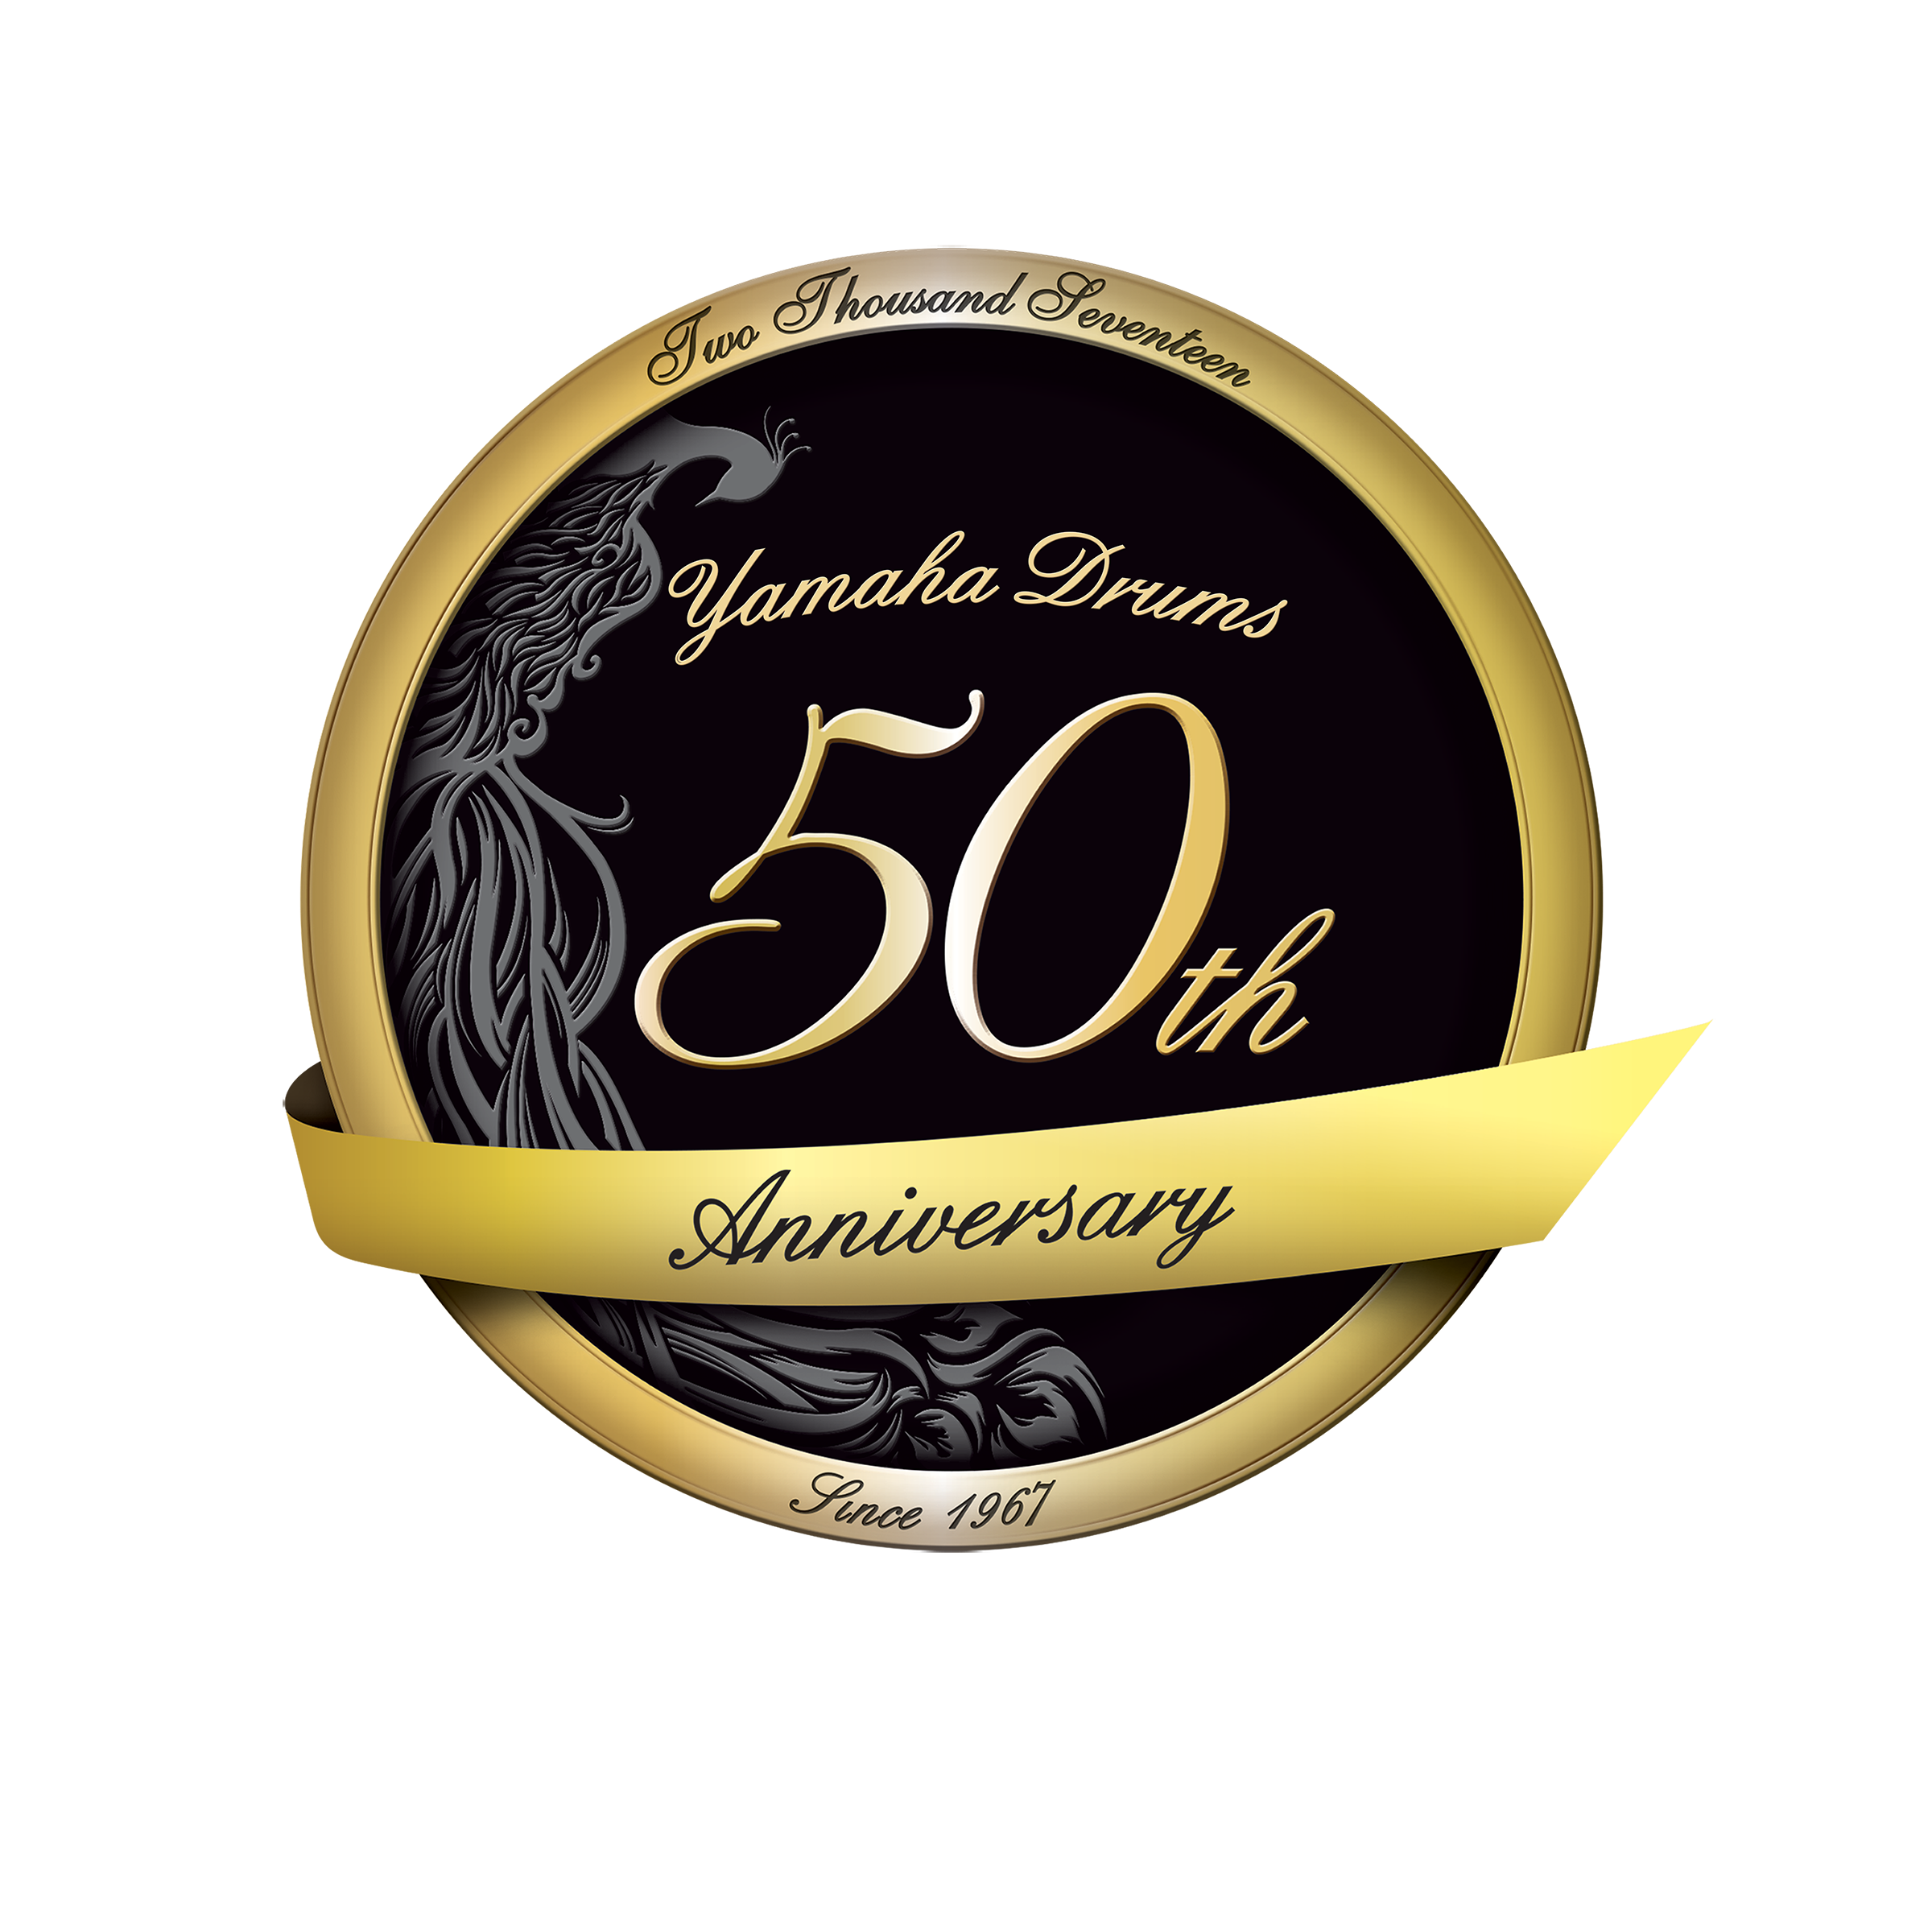 yamaha 50th anniversary sdm